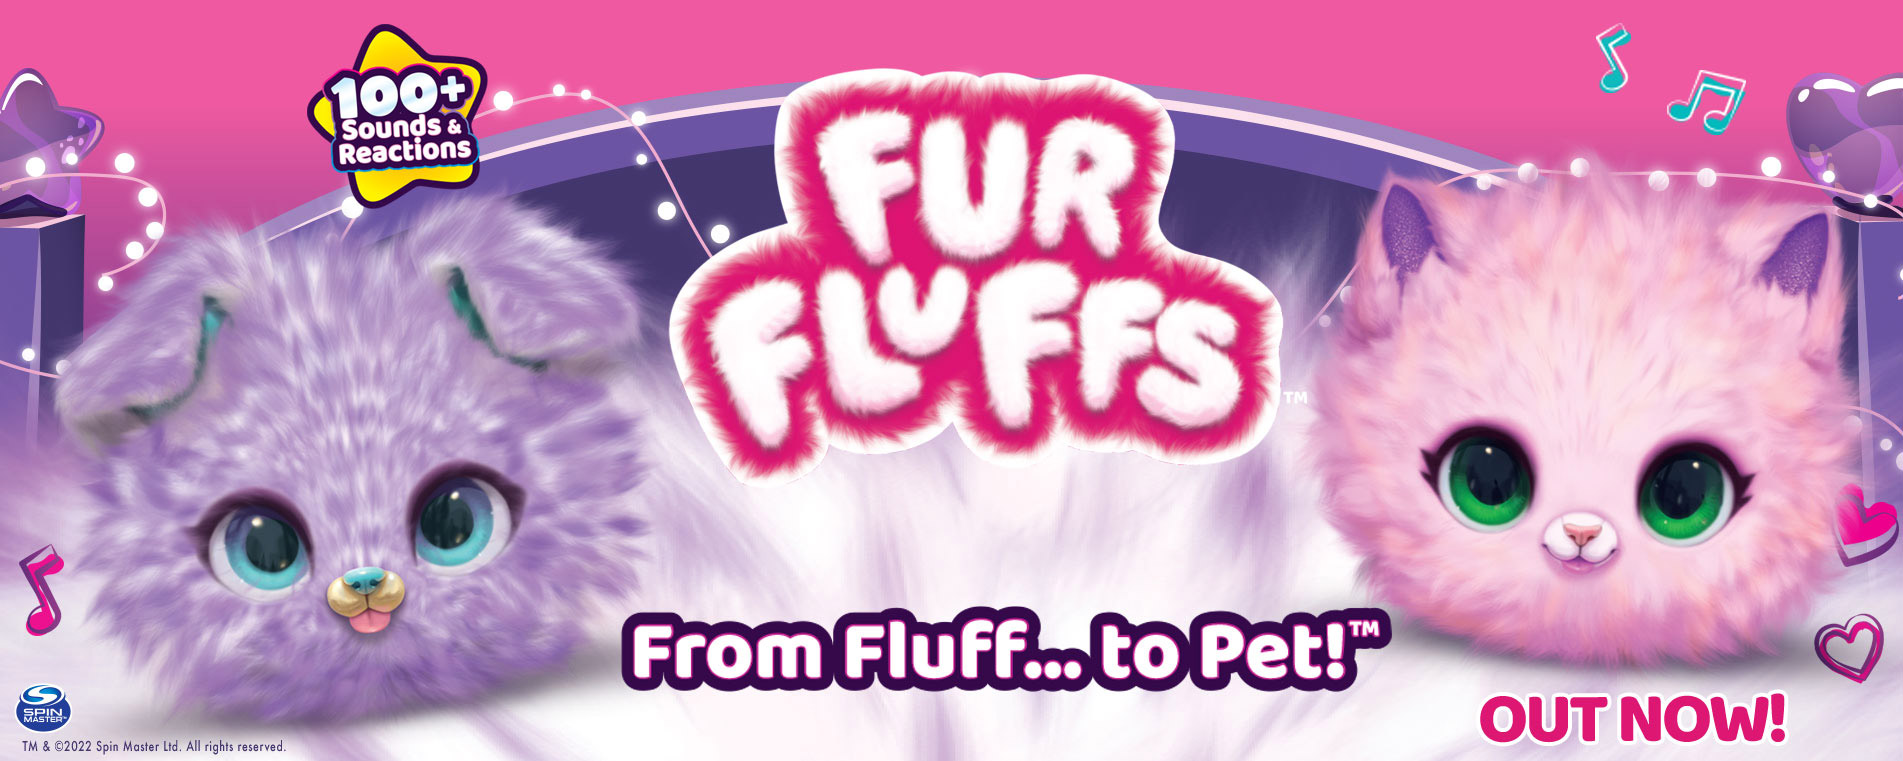 FurFluffs